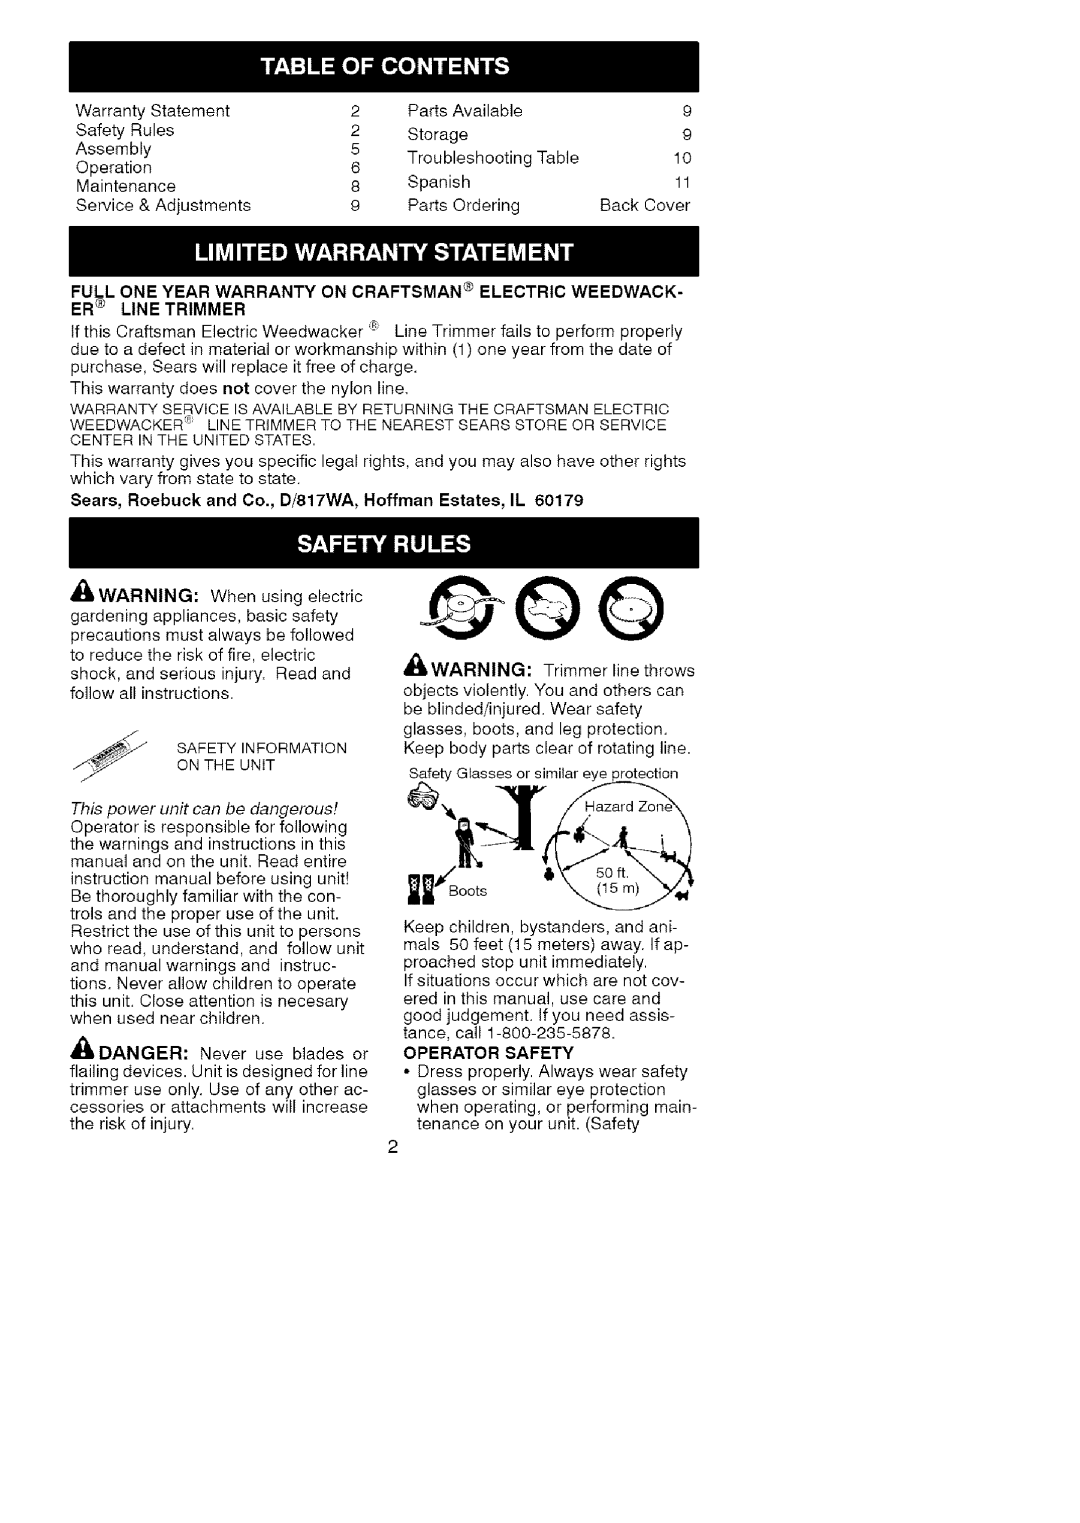 Craftsman 358.74529 instruction manual Operator Safety 